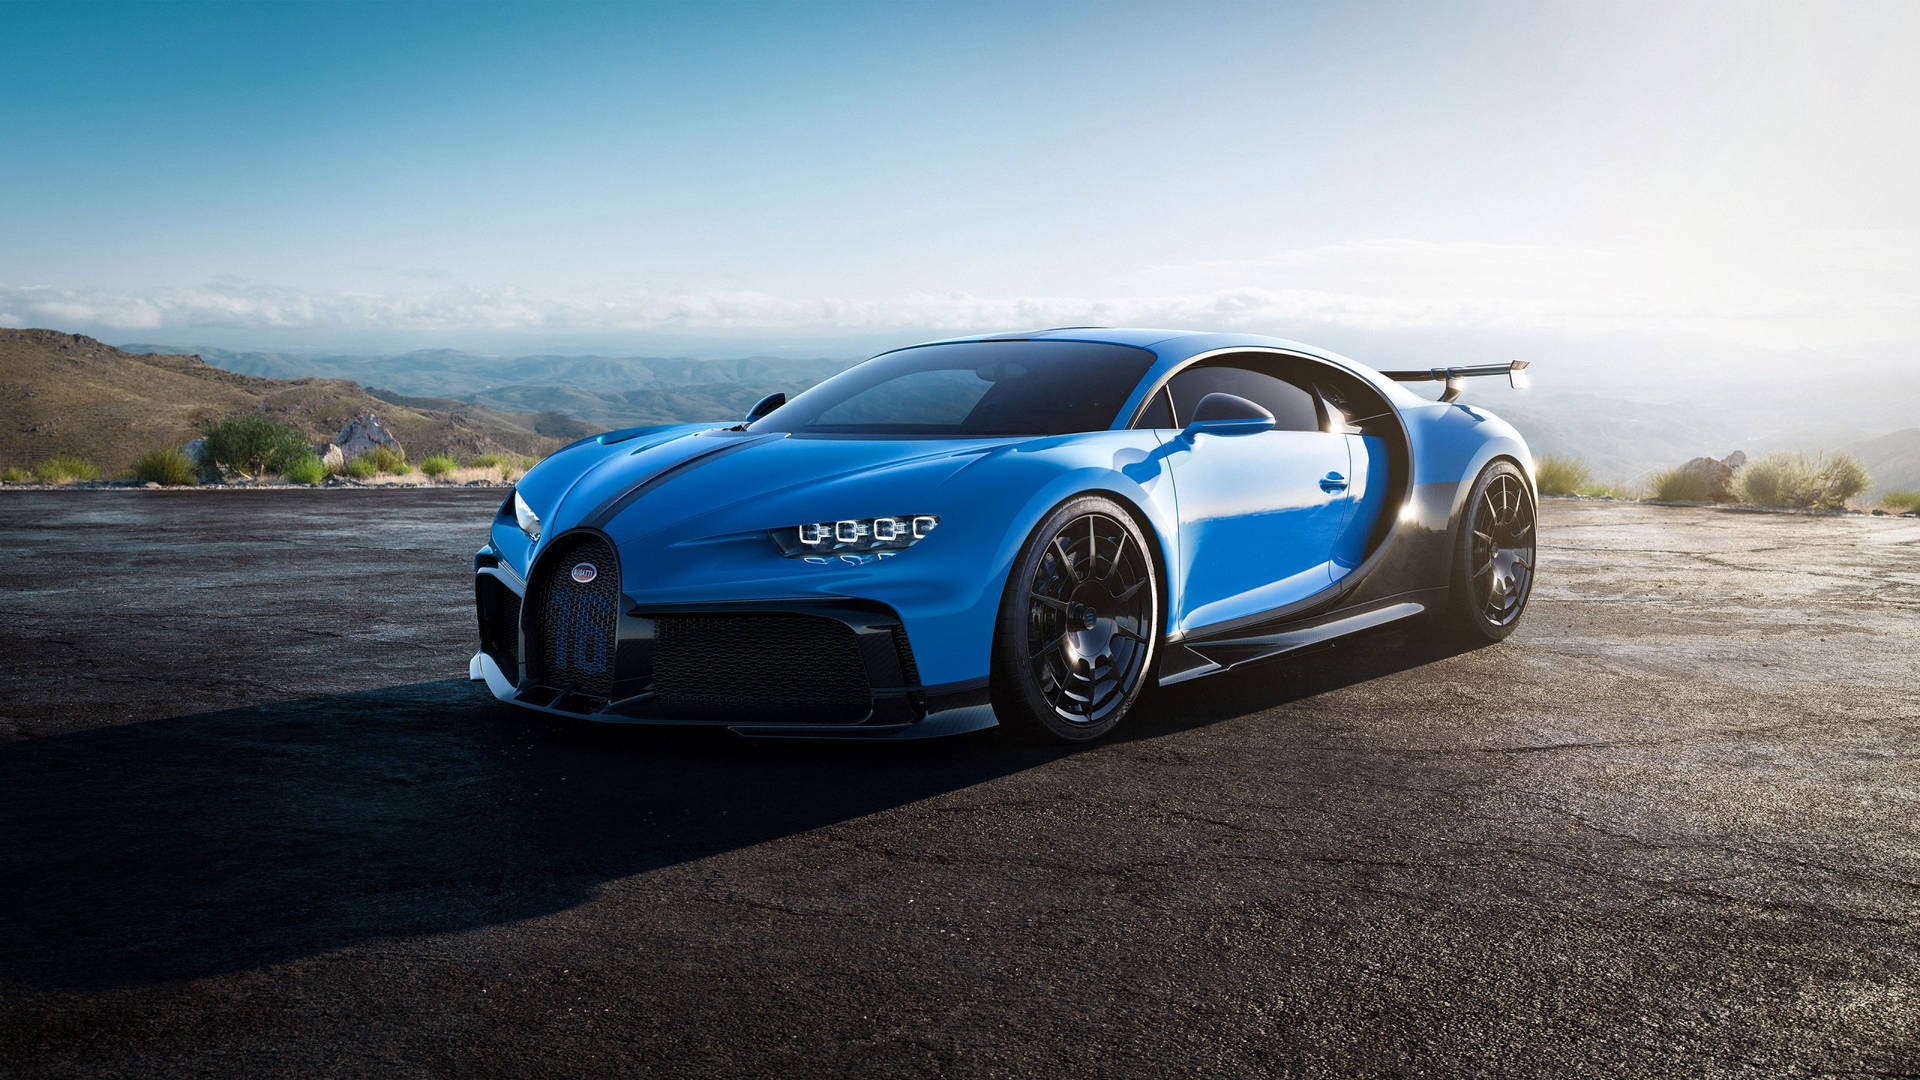 Top 999+ Cool Bugatti Wallpapers Full HD, 4K Free to Use